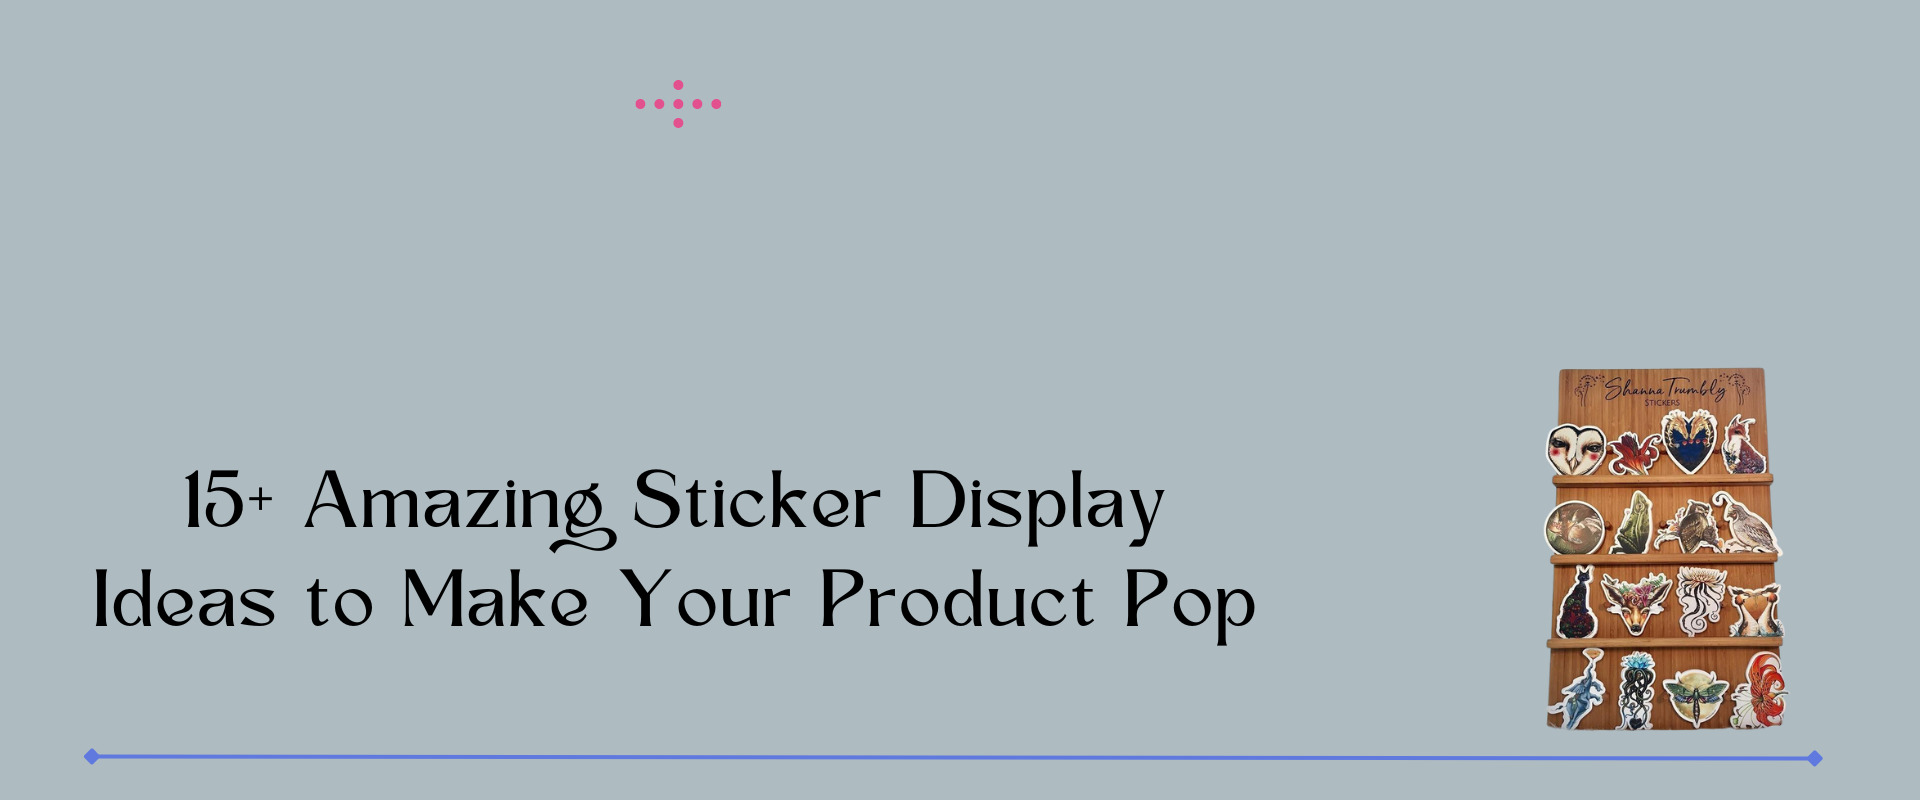 sticker display ideas